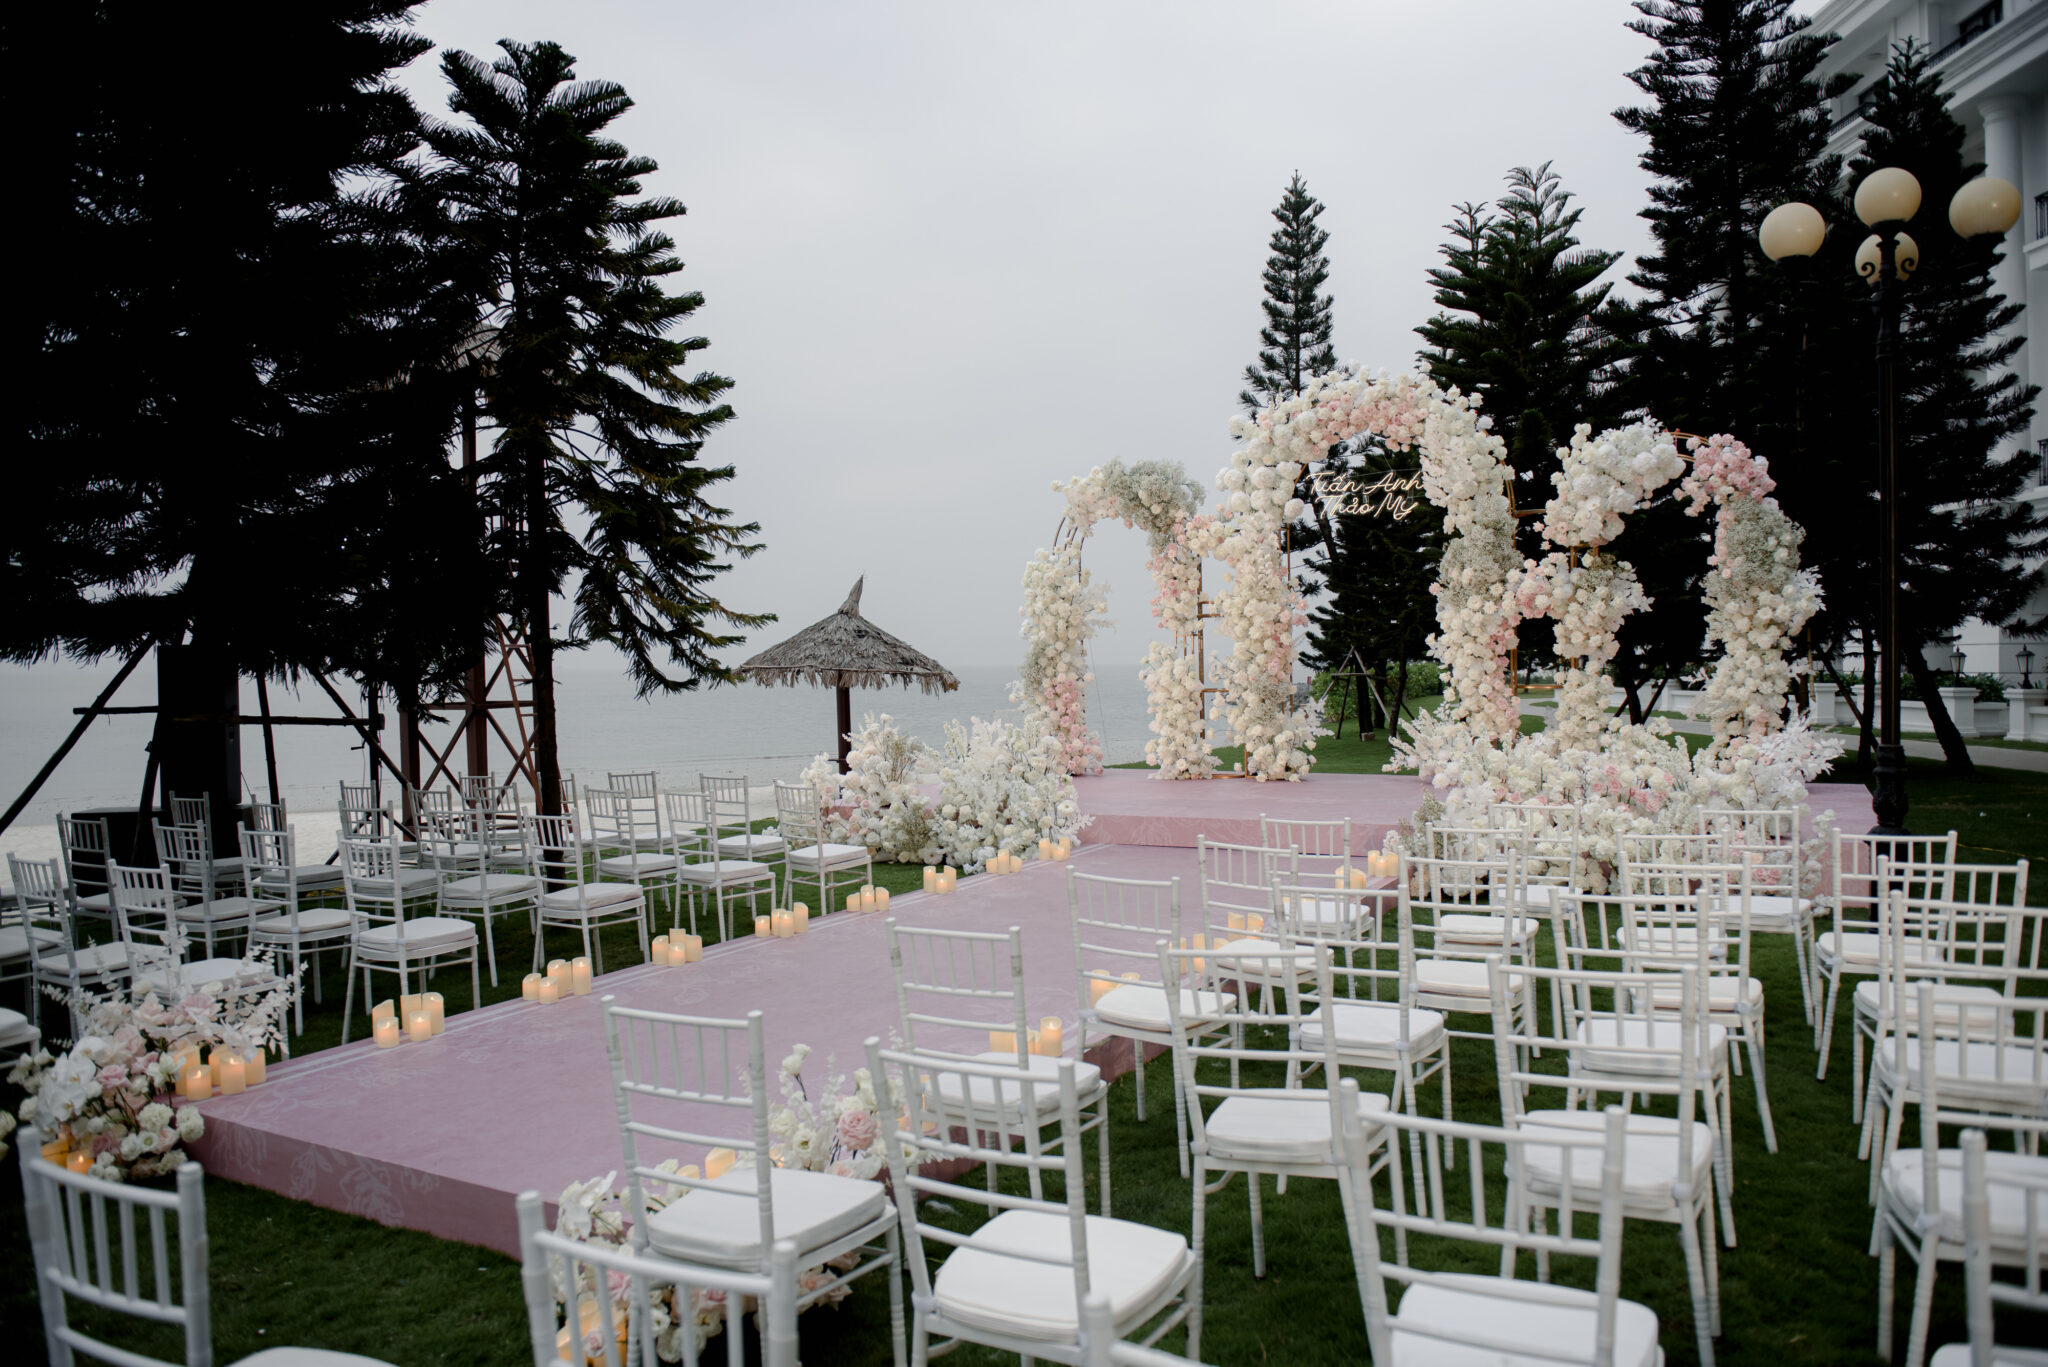 An outdoor wedding in Ha Long